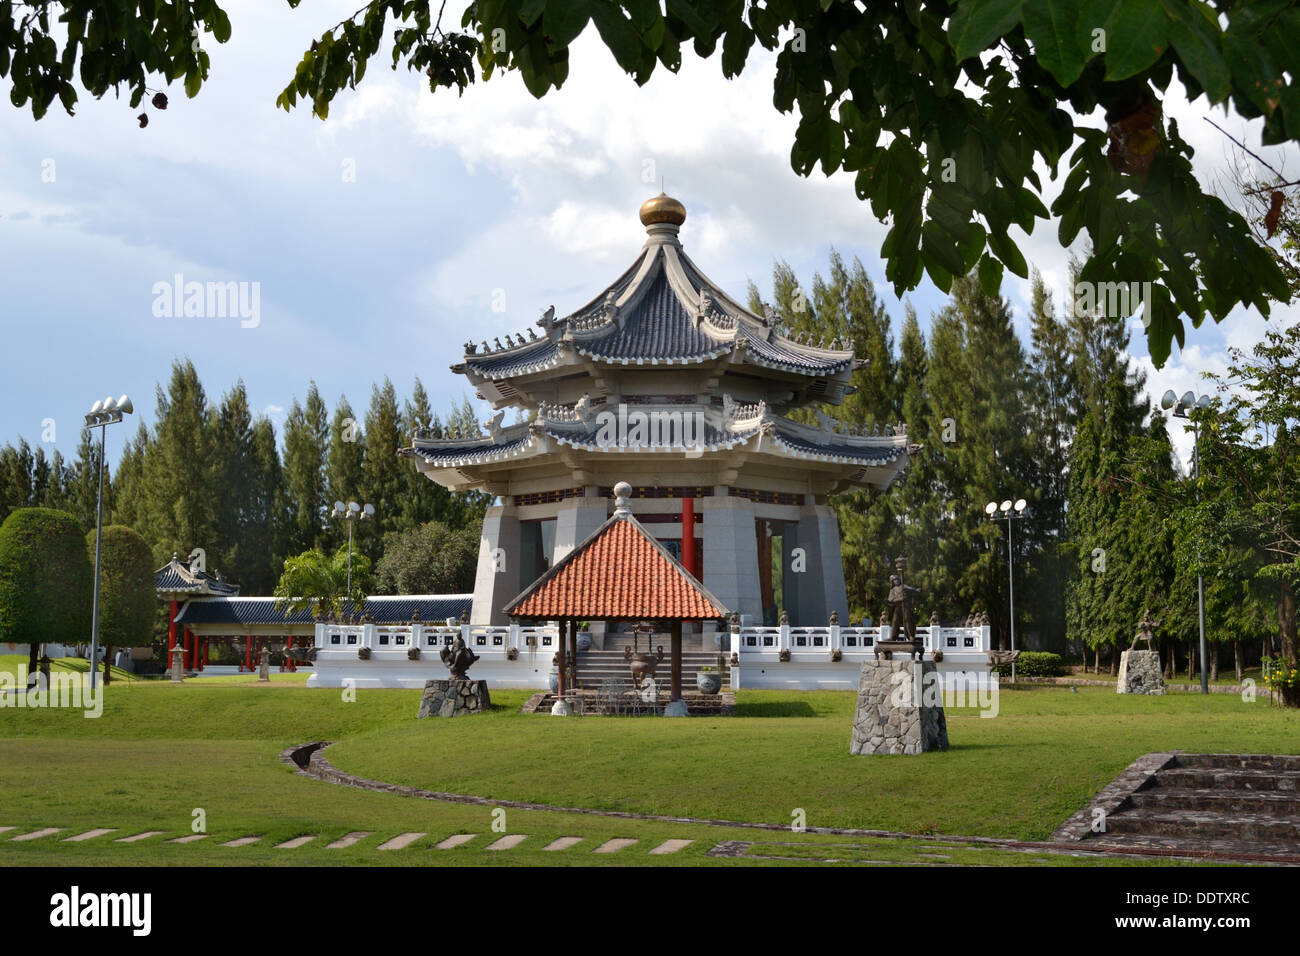 Pagoda at Three Kingdoms Theme Park Chinese Pagodas and gardens Pattaya Stock Photo